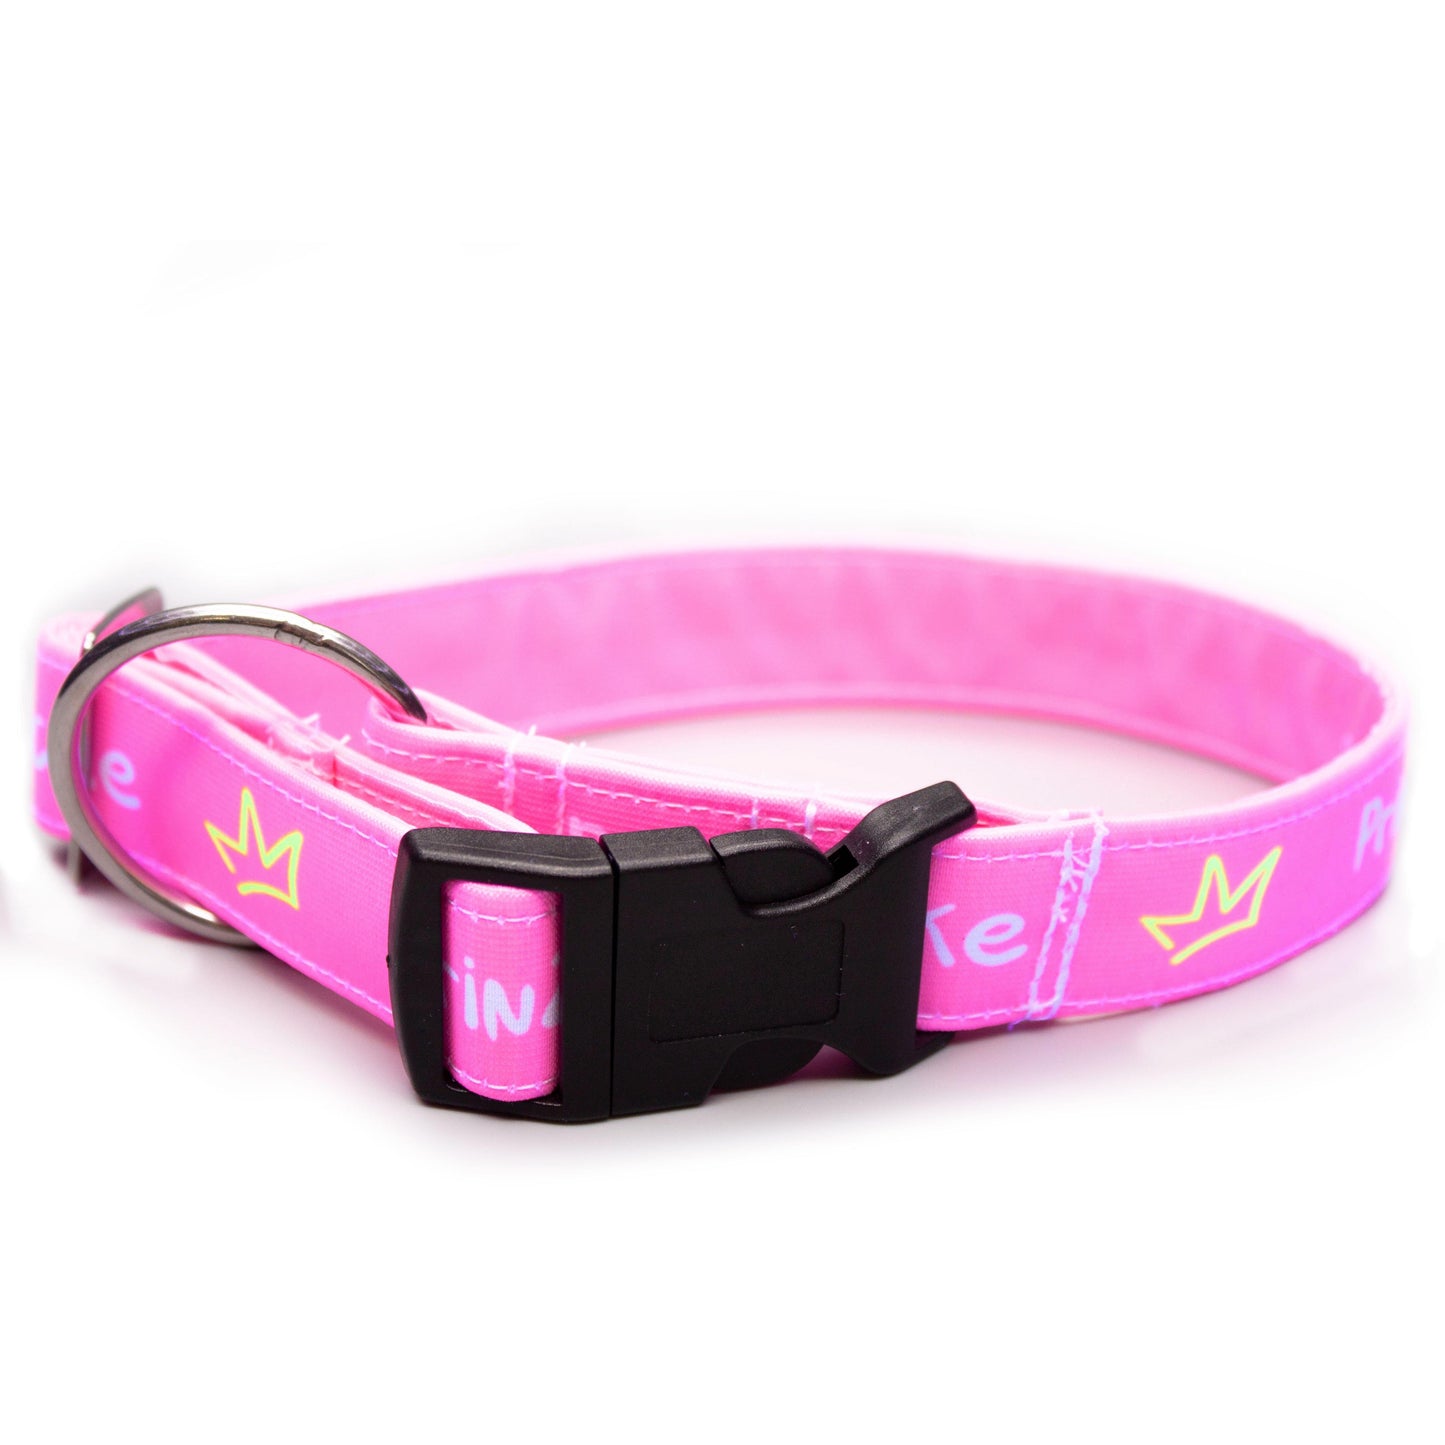 Prinzicke rosa - Neon - Hundehalsband